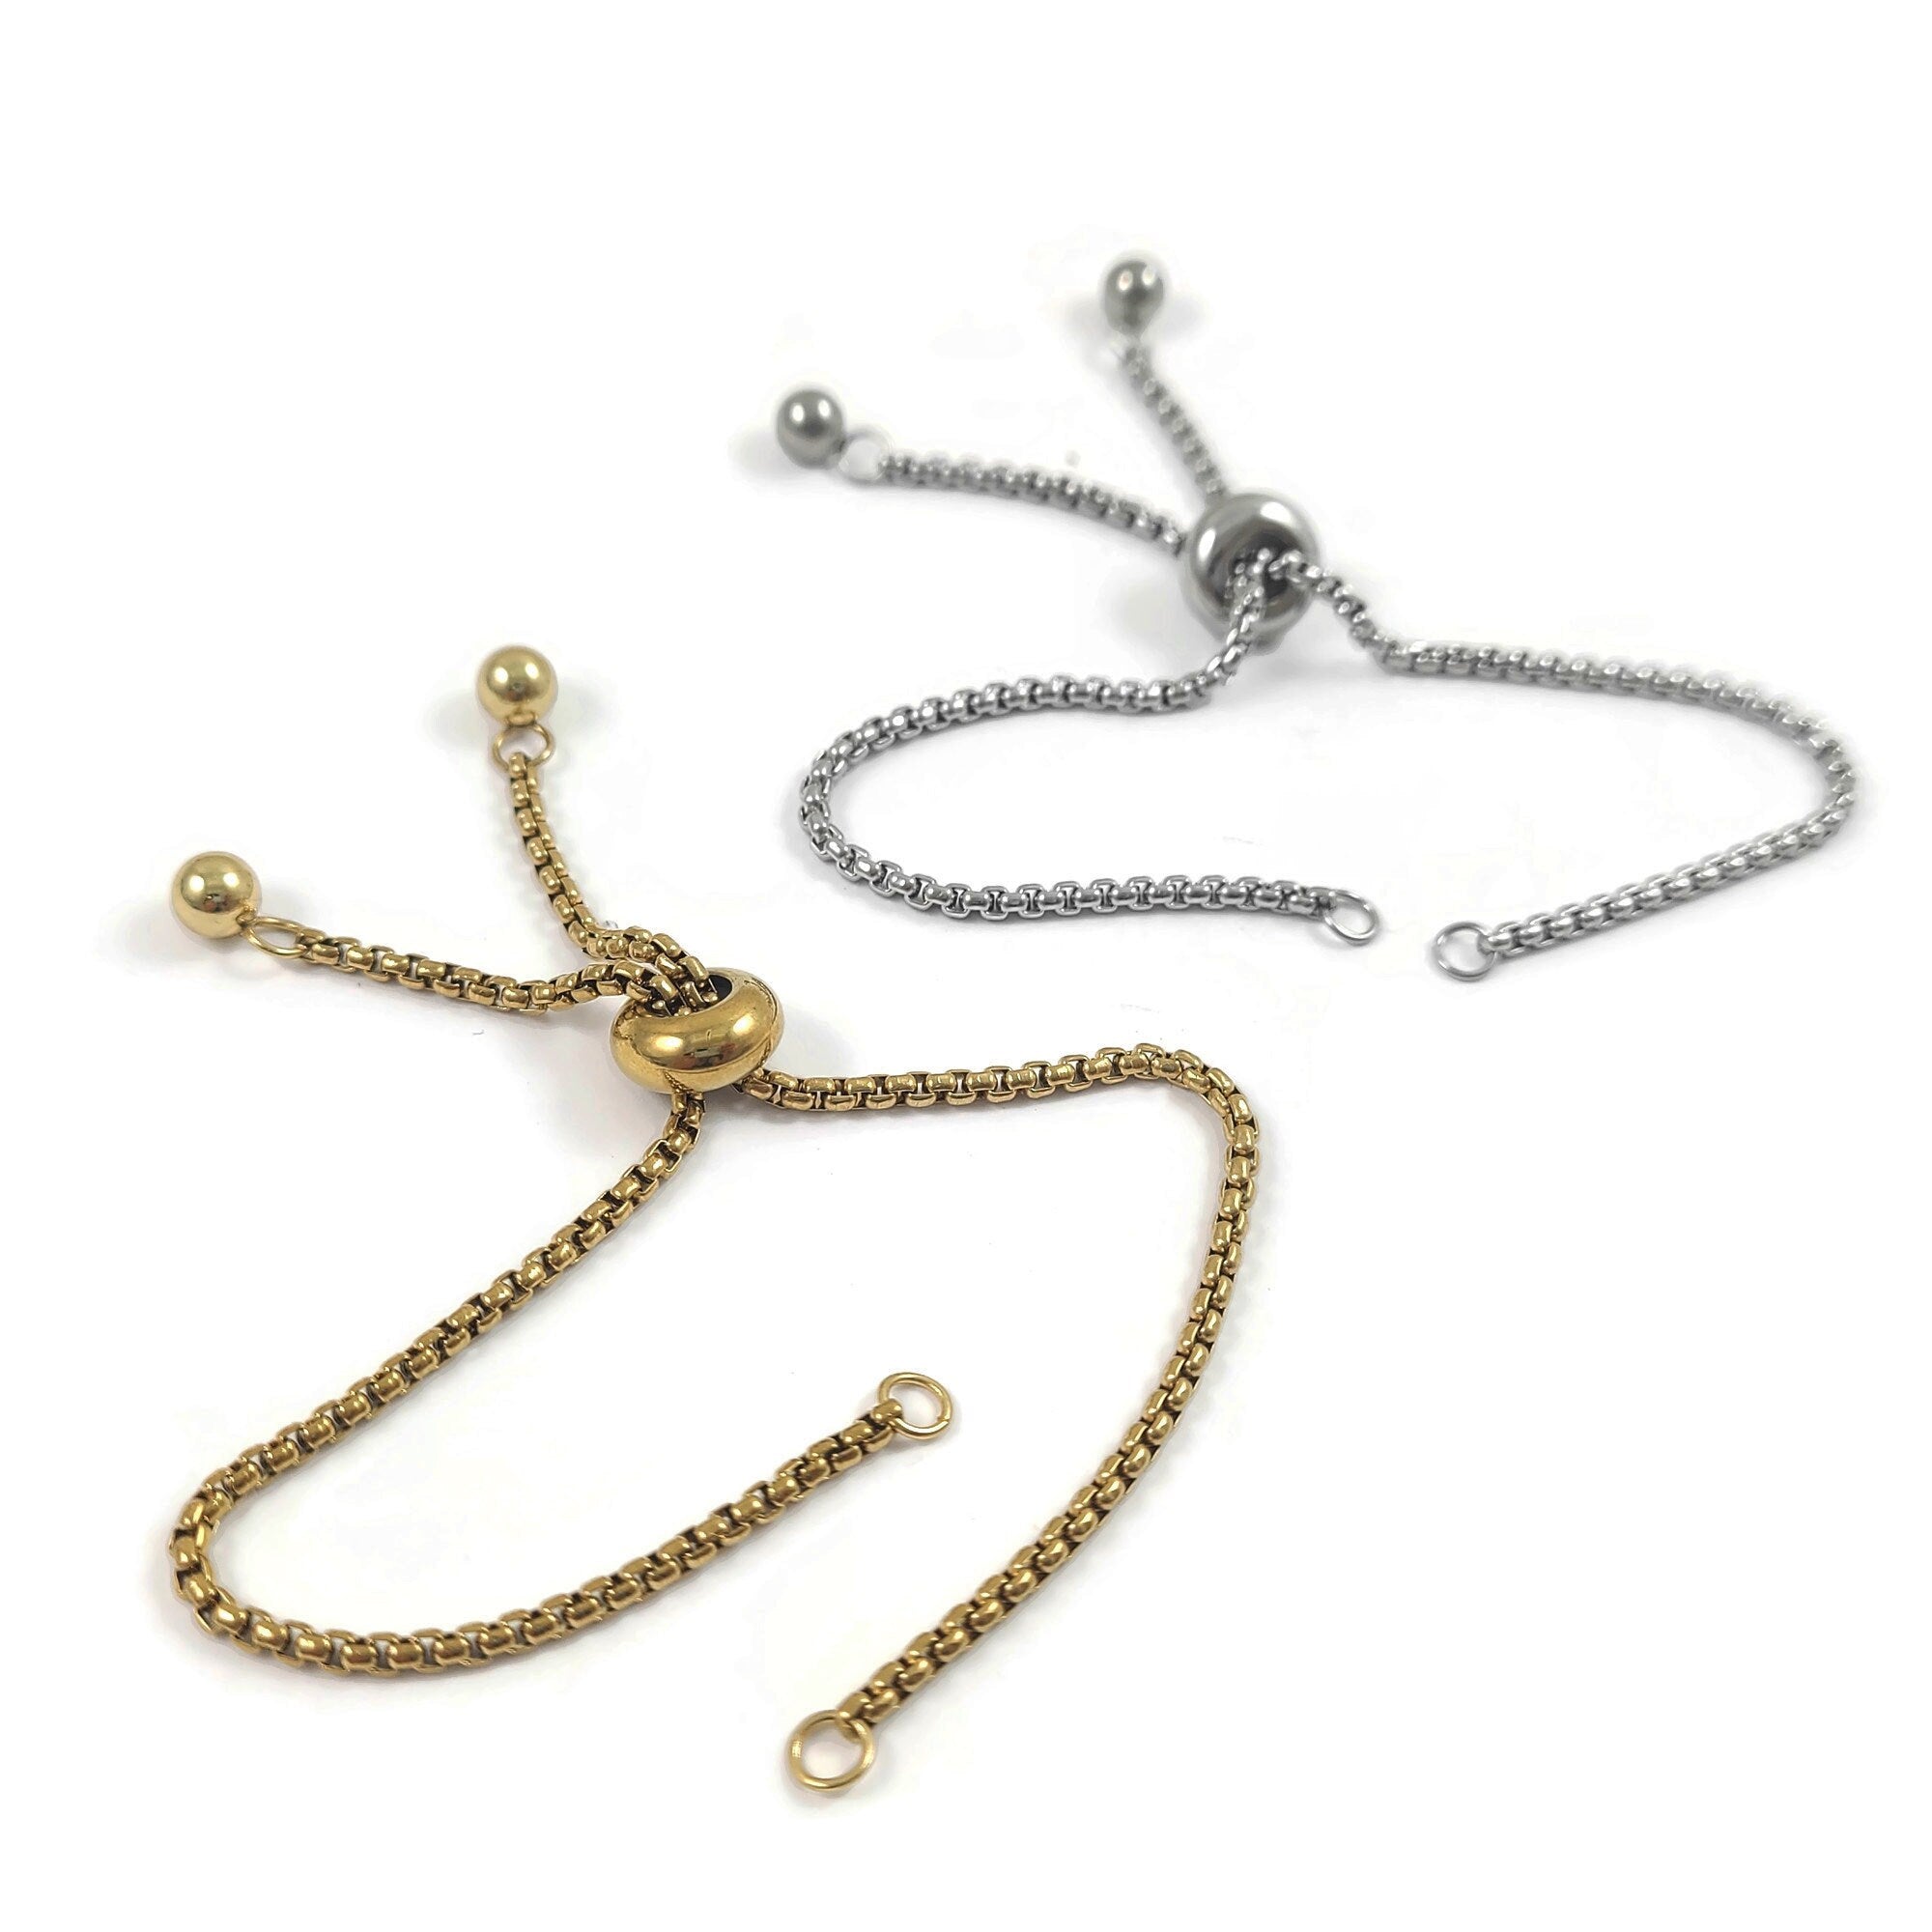 Adjustable chain for slider bracelet making, Stainless steel, Bulk lot, Hypoallergenic jewelry finding supplies